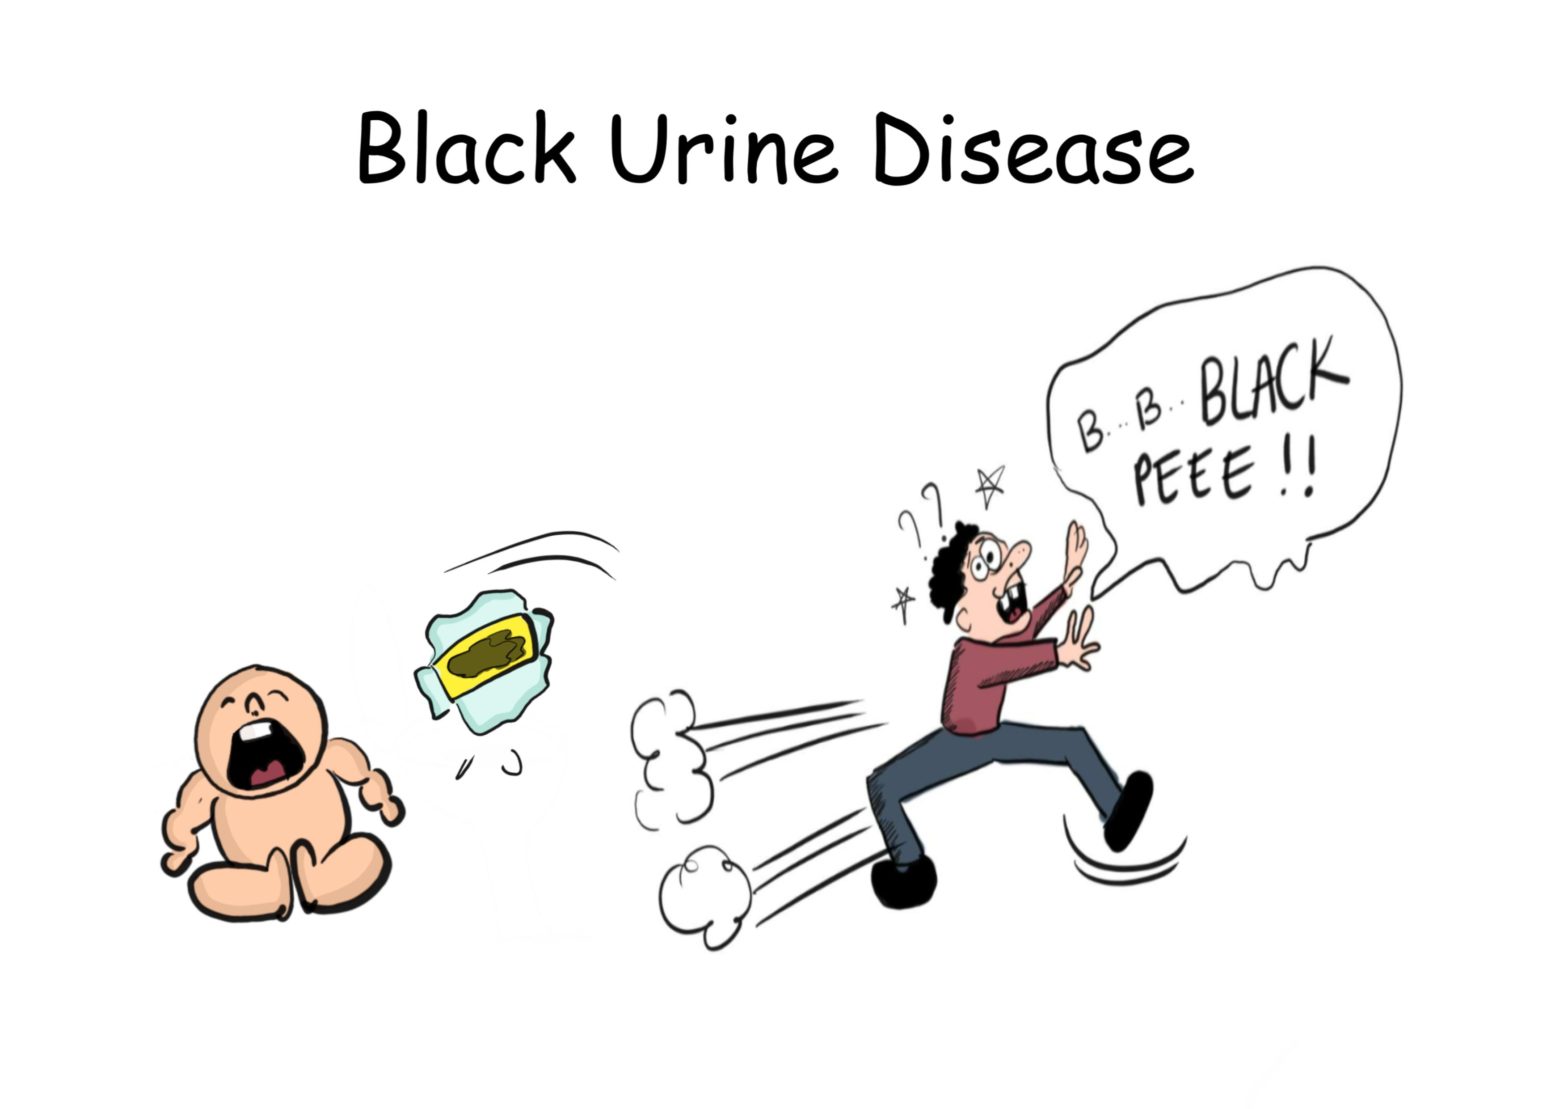 Black urine disease